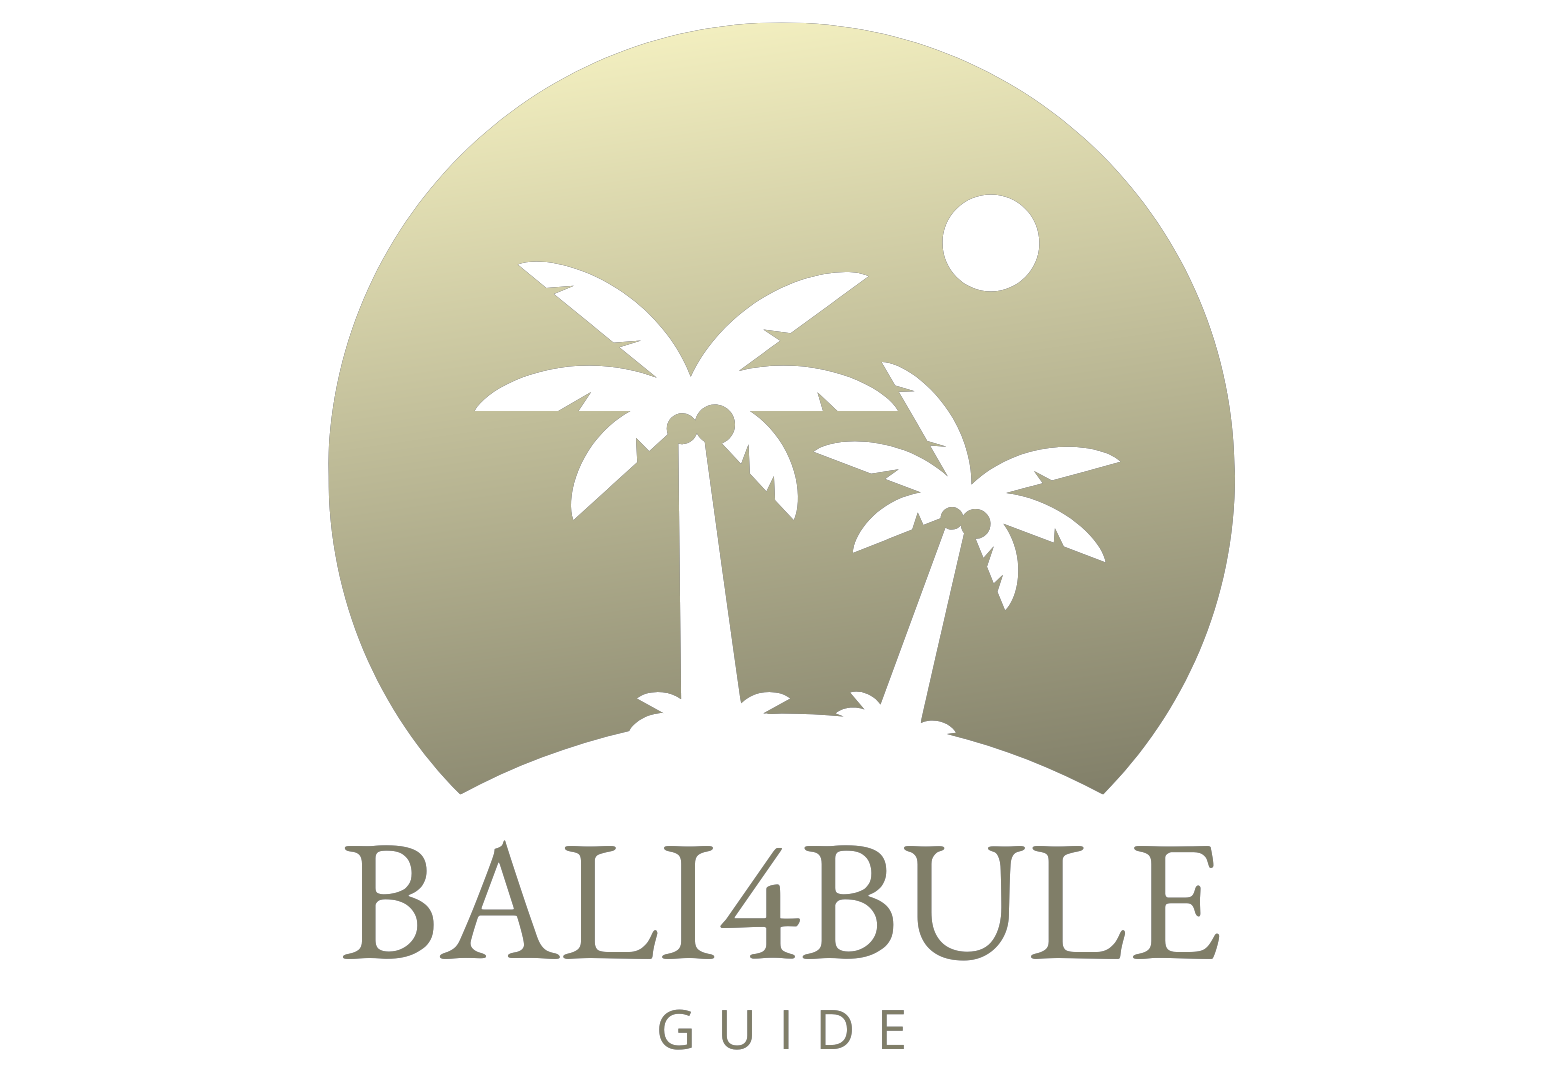 Bali4Bule